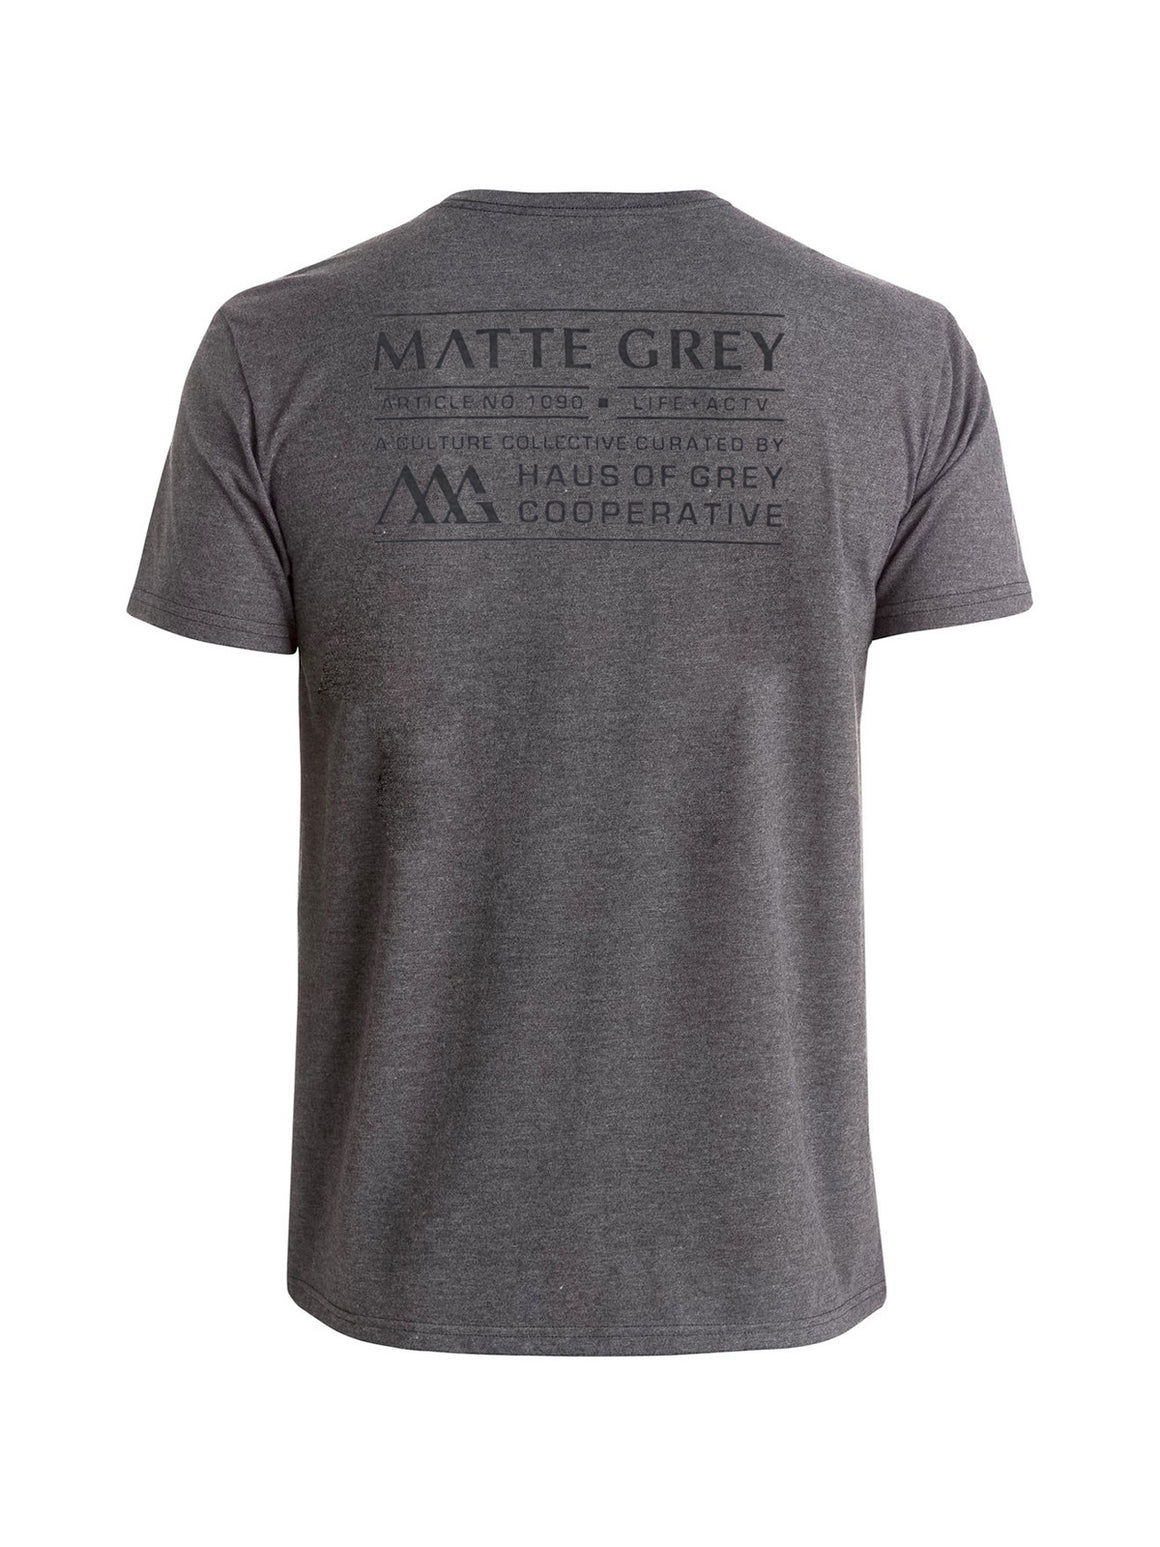 Badge Print Tee Shirt - Medium Grey (Black)